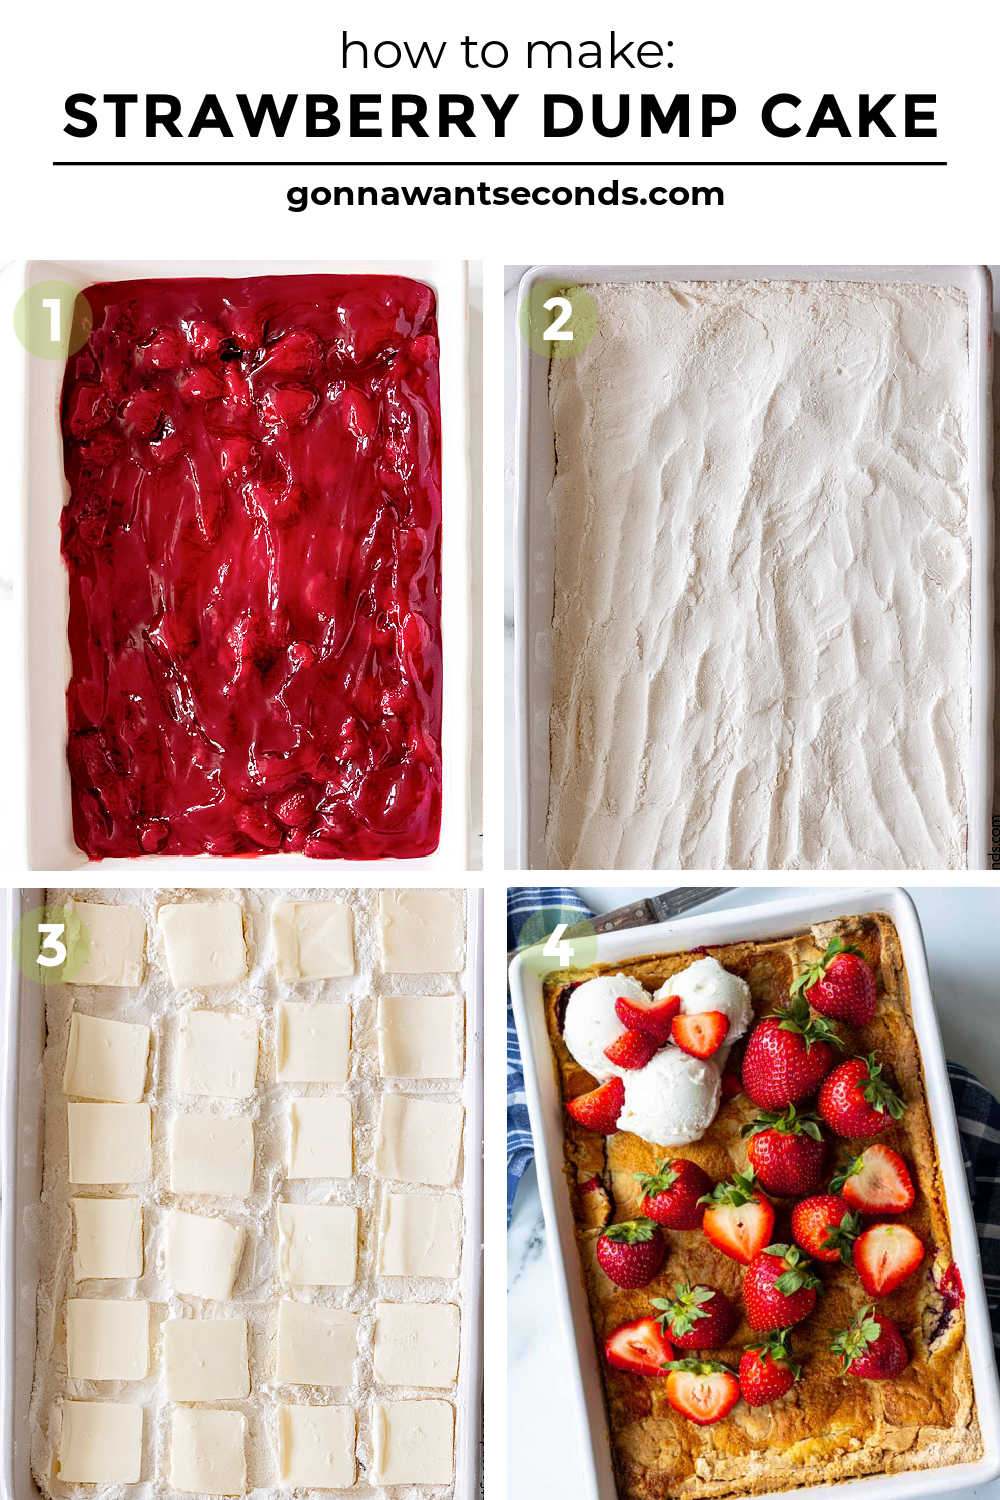 Step by step how to make strawberry dump cake